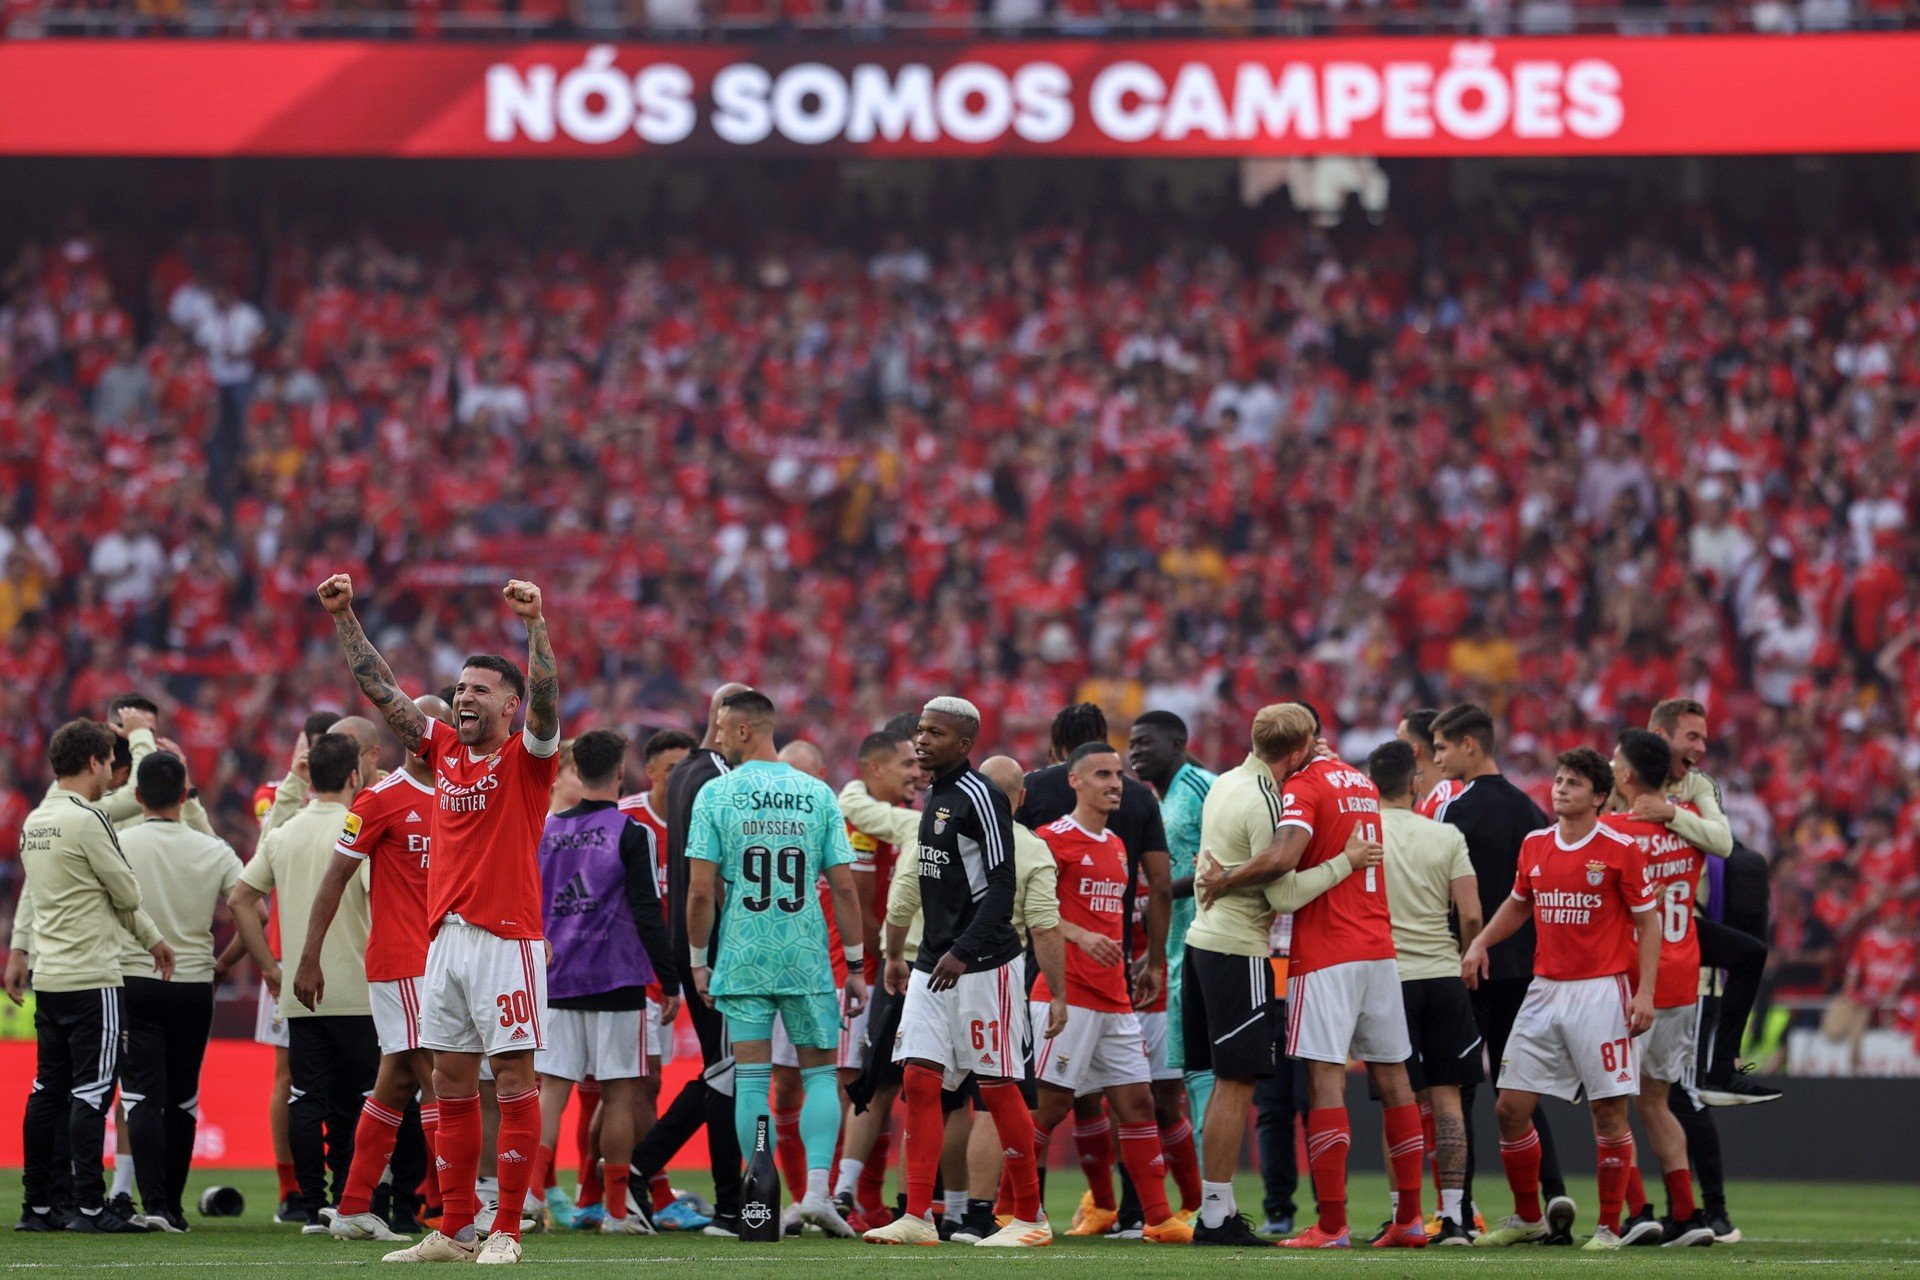 Liga portugalska - Benfica Lizbona mistrzem po raz 38. w historii | Gol24